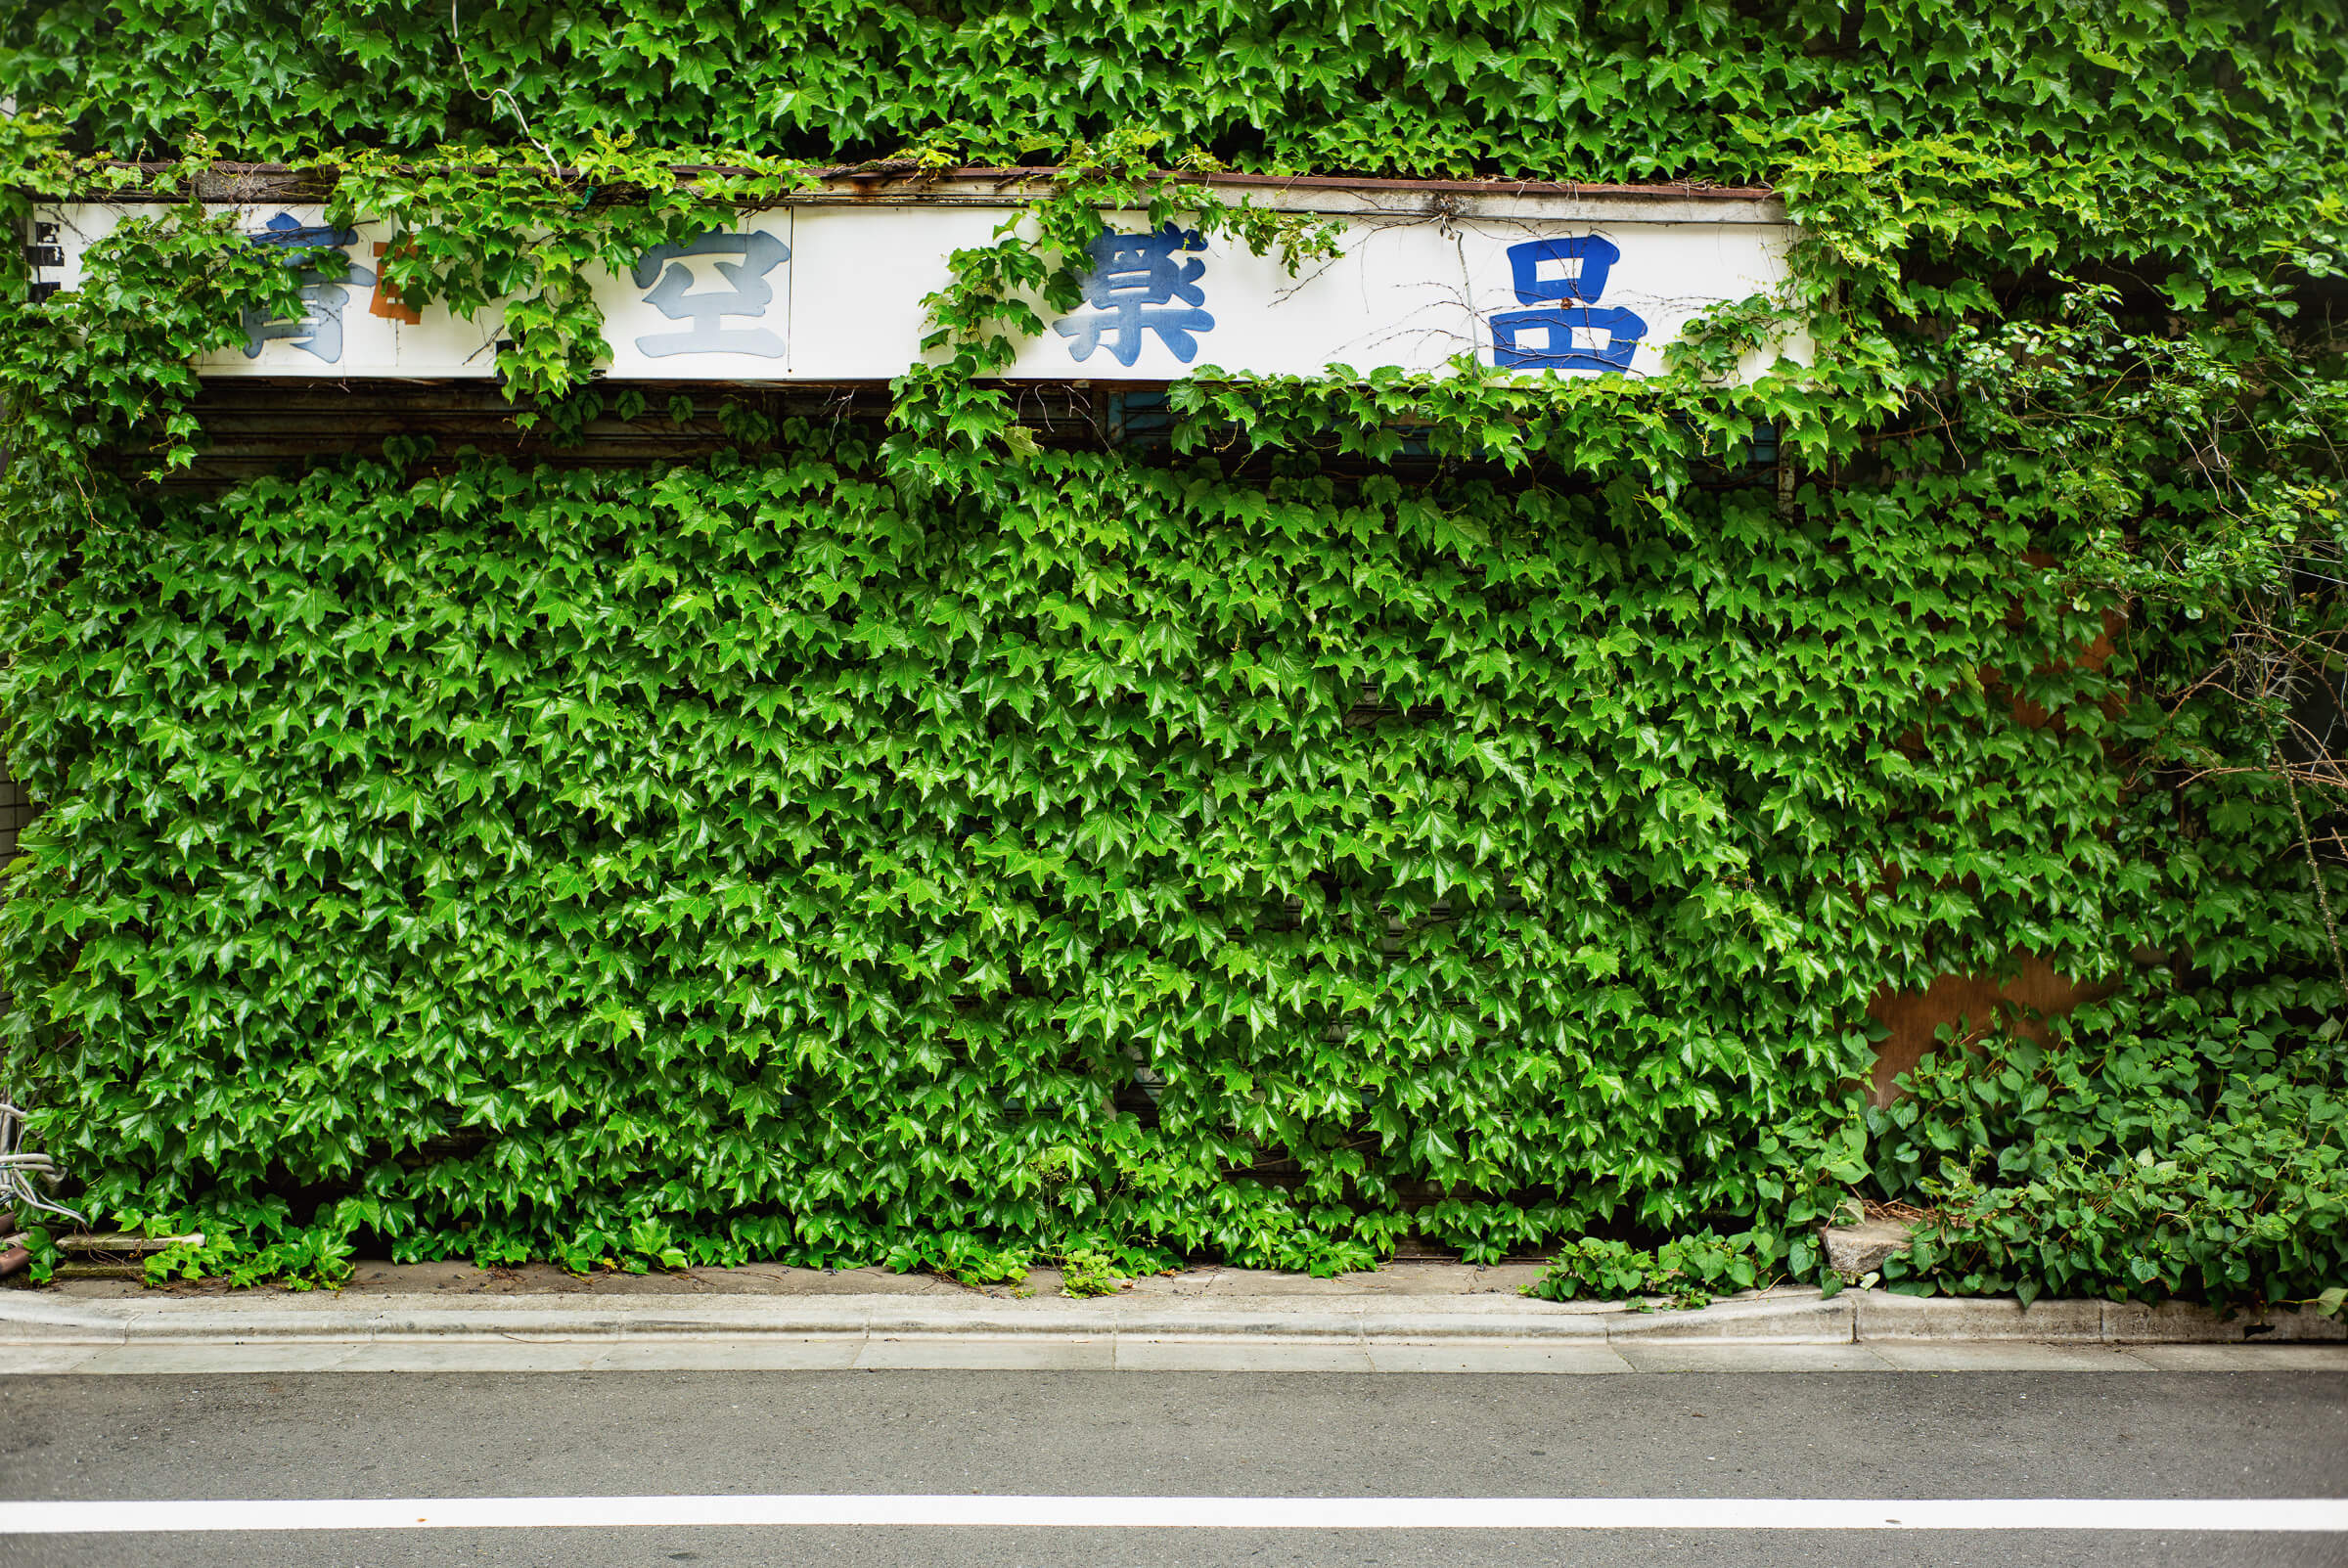 Urban Tokyo greenery — Tokyo Times